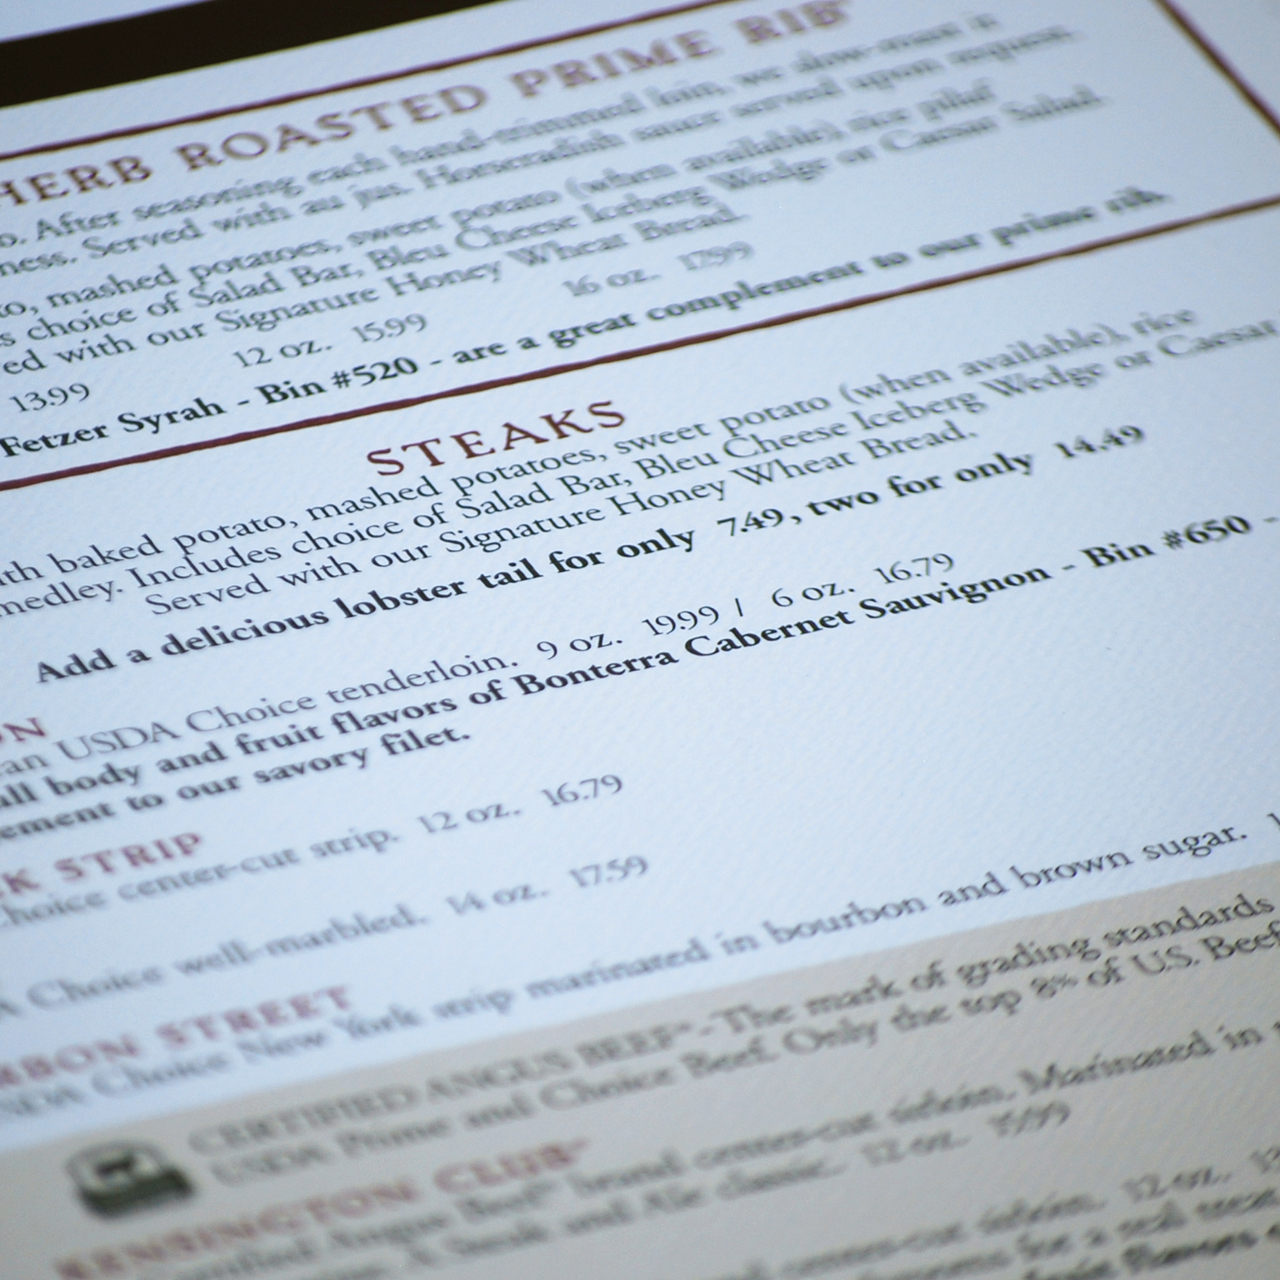 An image of Steak & Ale's dinner menu interior page design